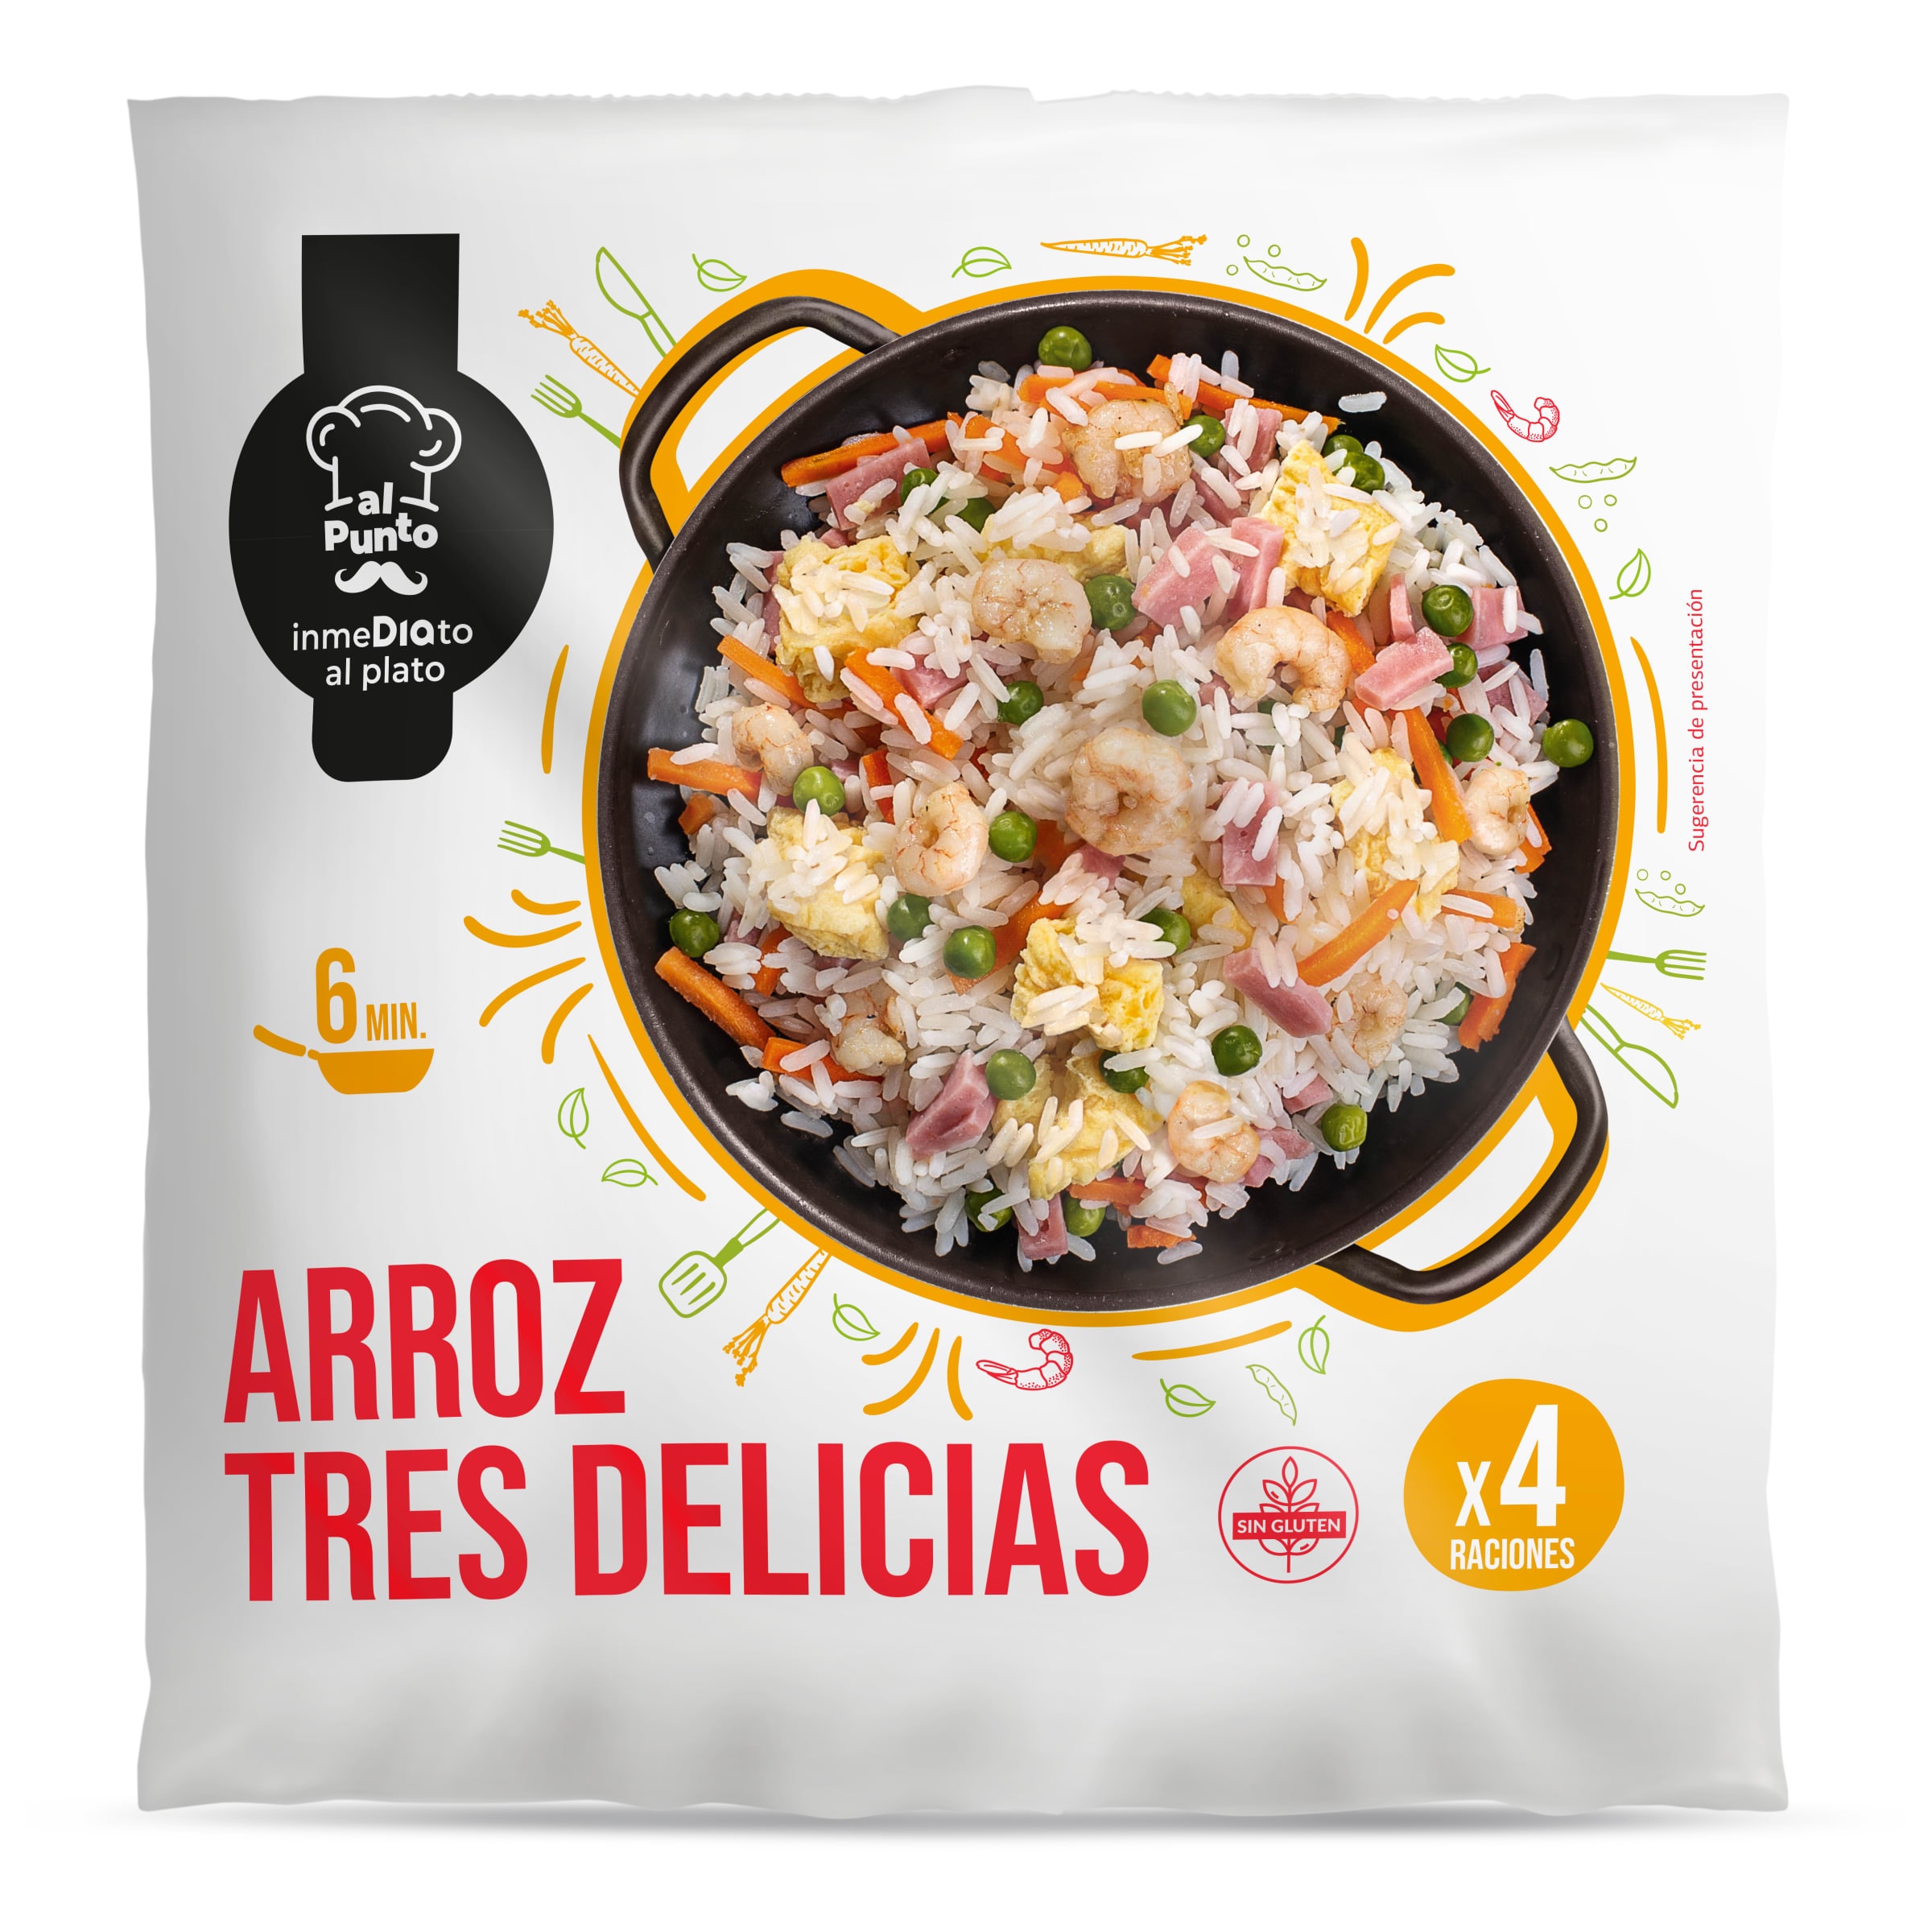 Arroz tres delicias Al Punto bolsa 850 g - Supermercados DIA